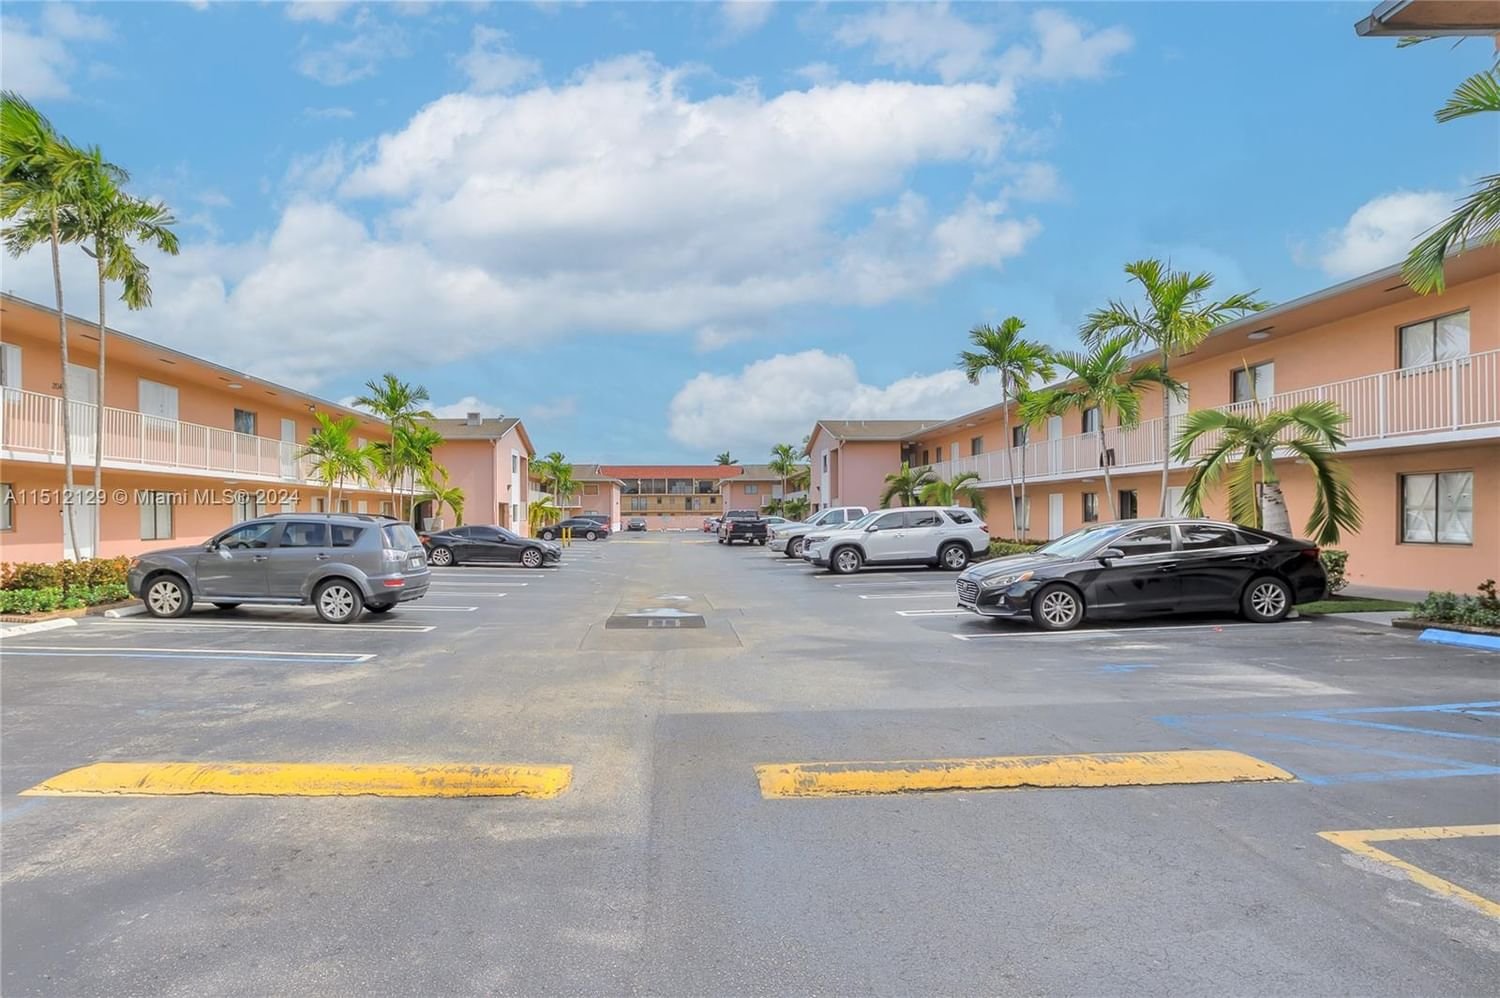 Real estate property located at 6041 24th Ave B-111, Miami-Dade County, VILLAMORE CONDO, Hialeah, FL